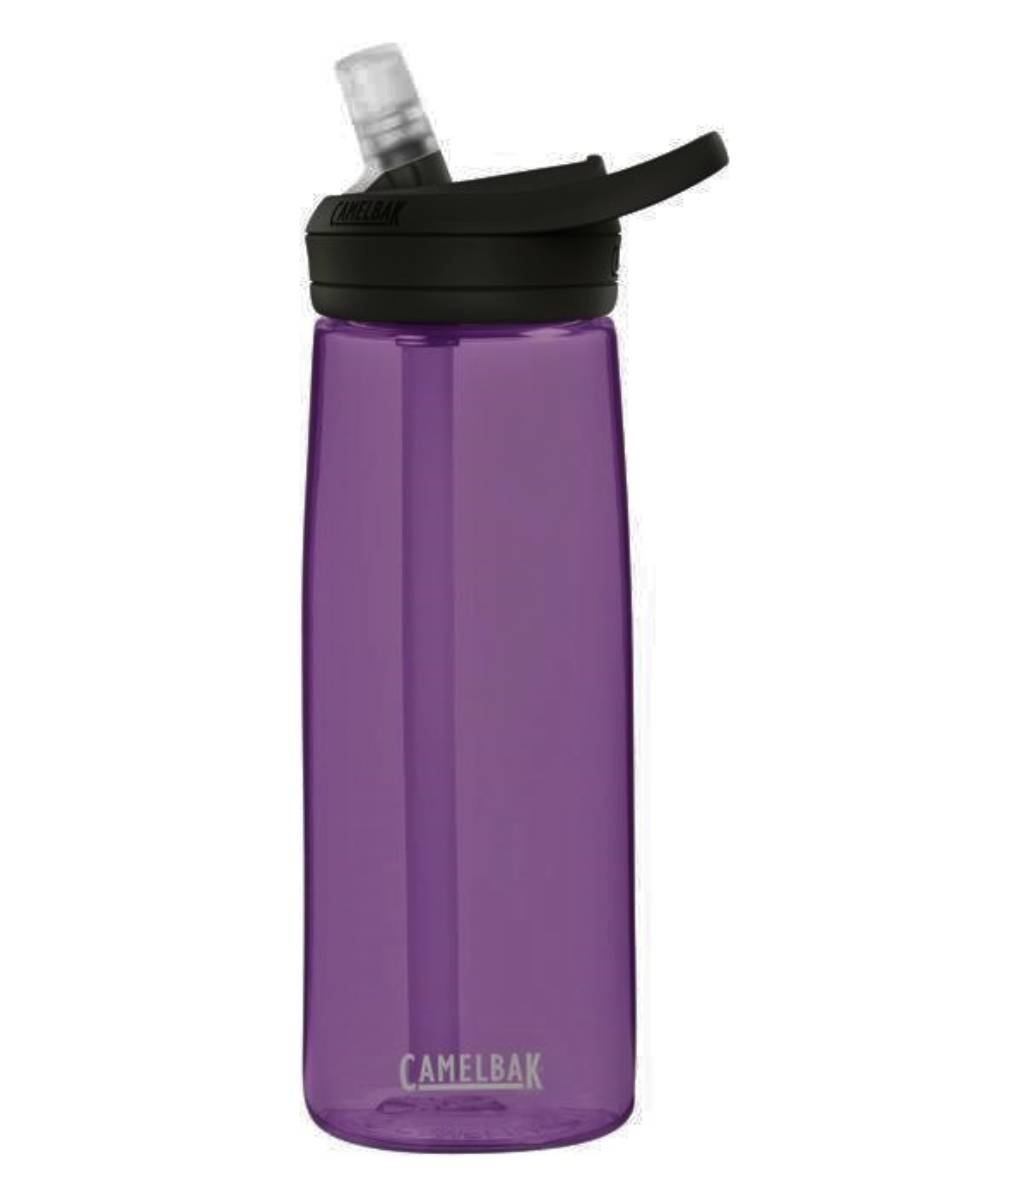 Camelbak Eddy Water Bottle, Royal Lilac - Shop Travel & To-Go at H-E-B